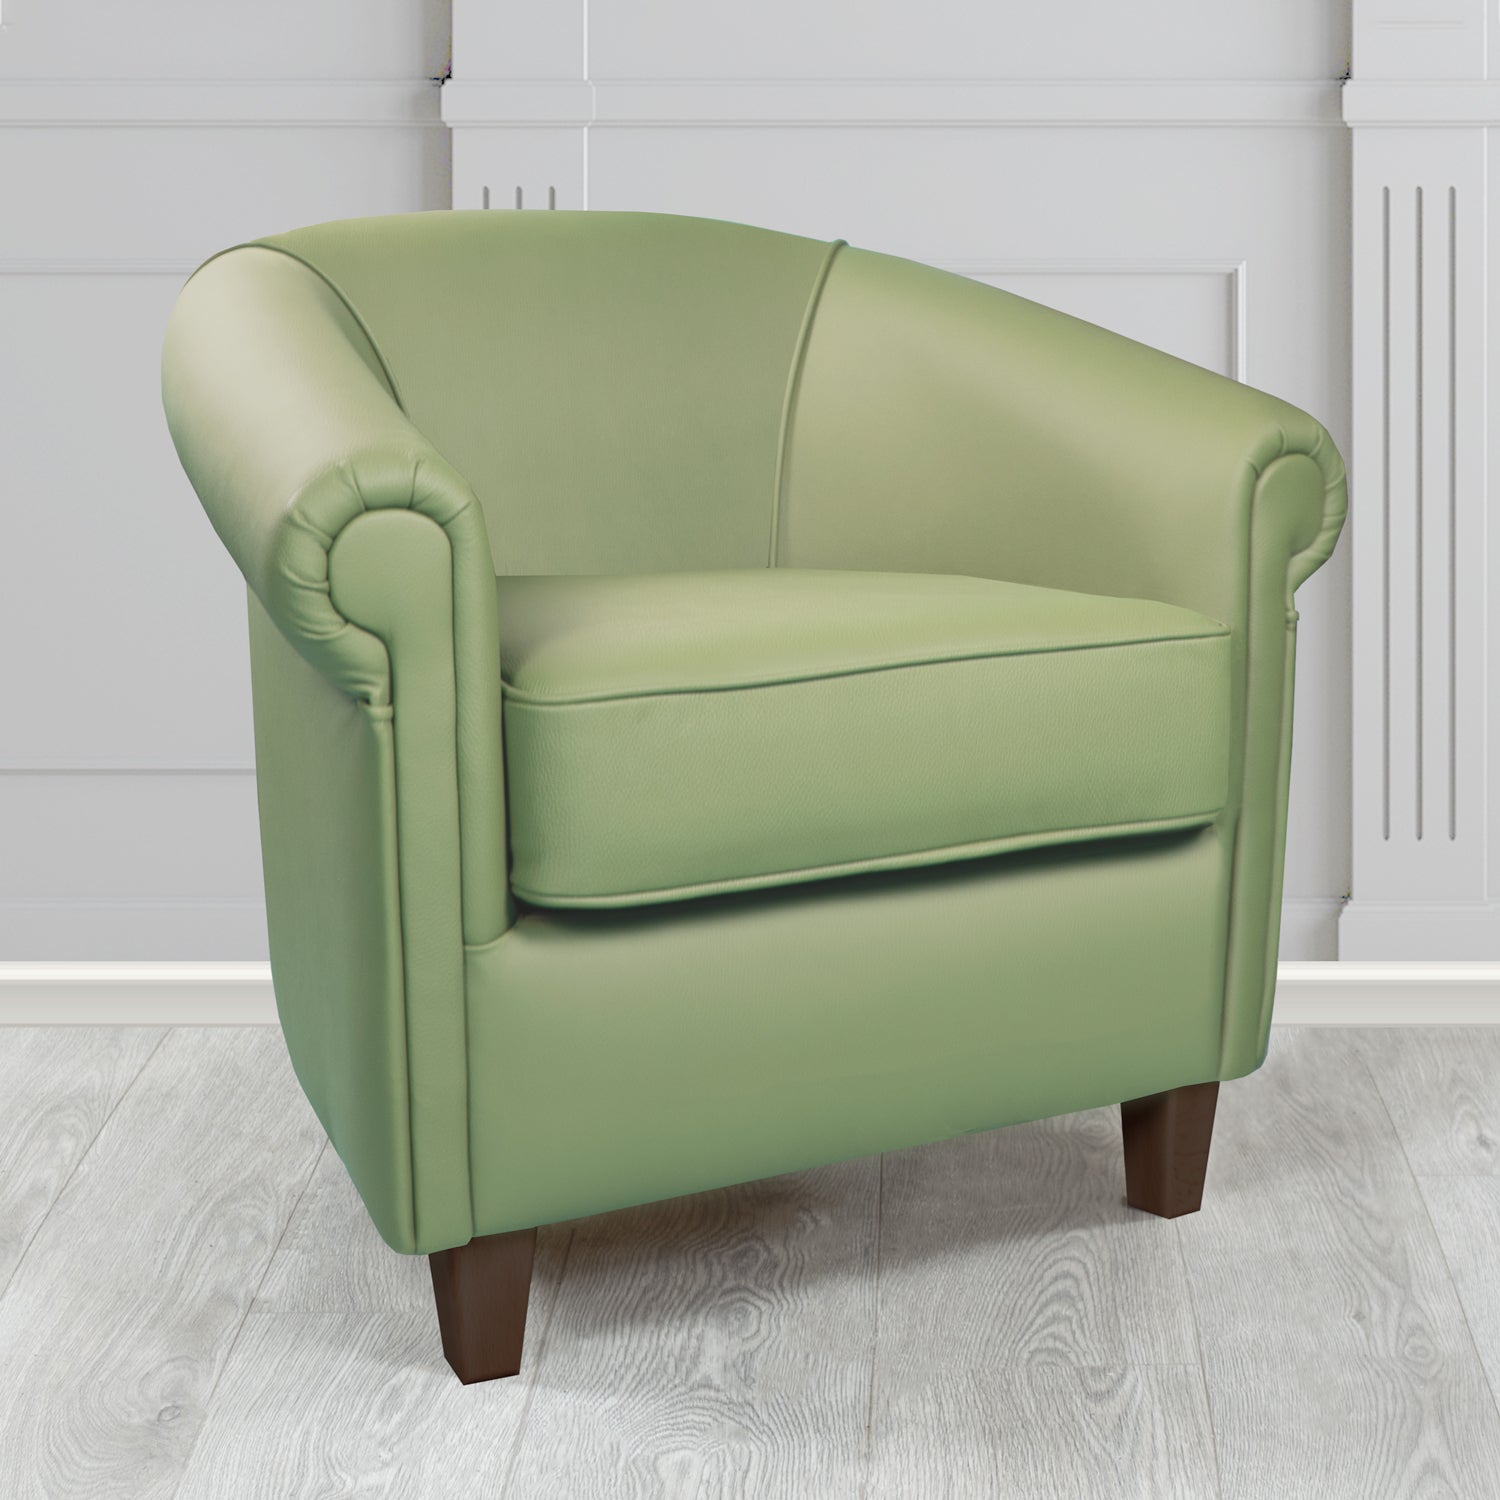 Siena Tub Chair in Crib 5 Shelly Thyme Green Genuine Leather - The Tub Chair Shop